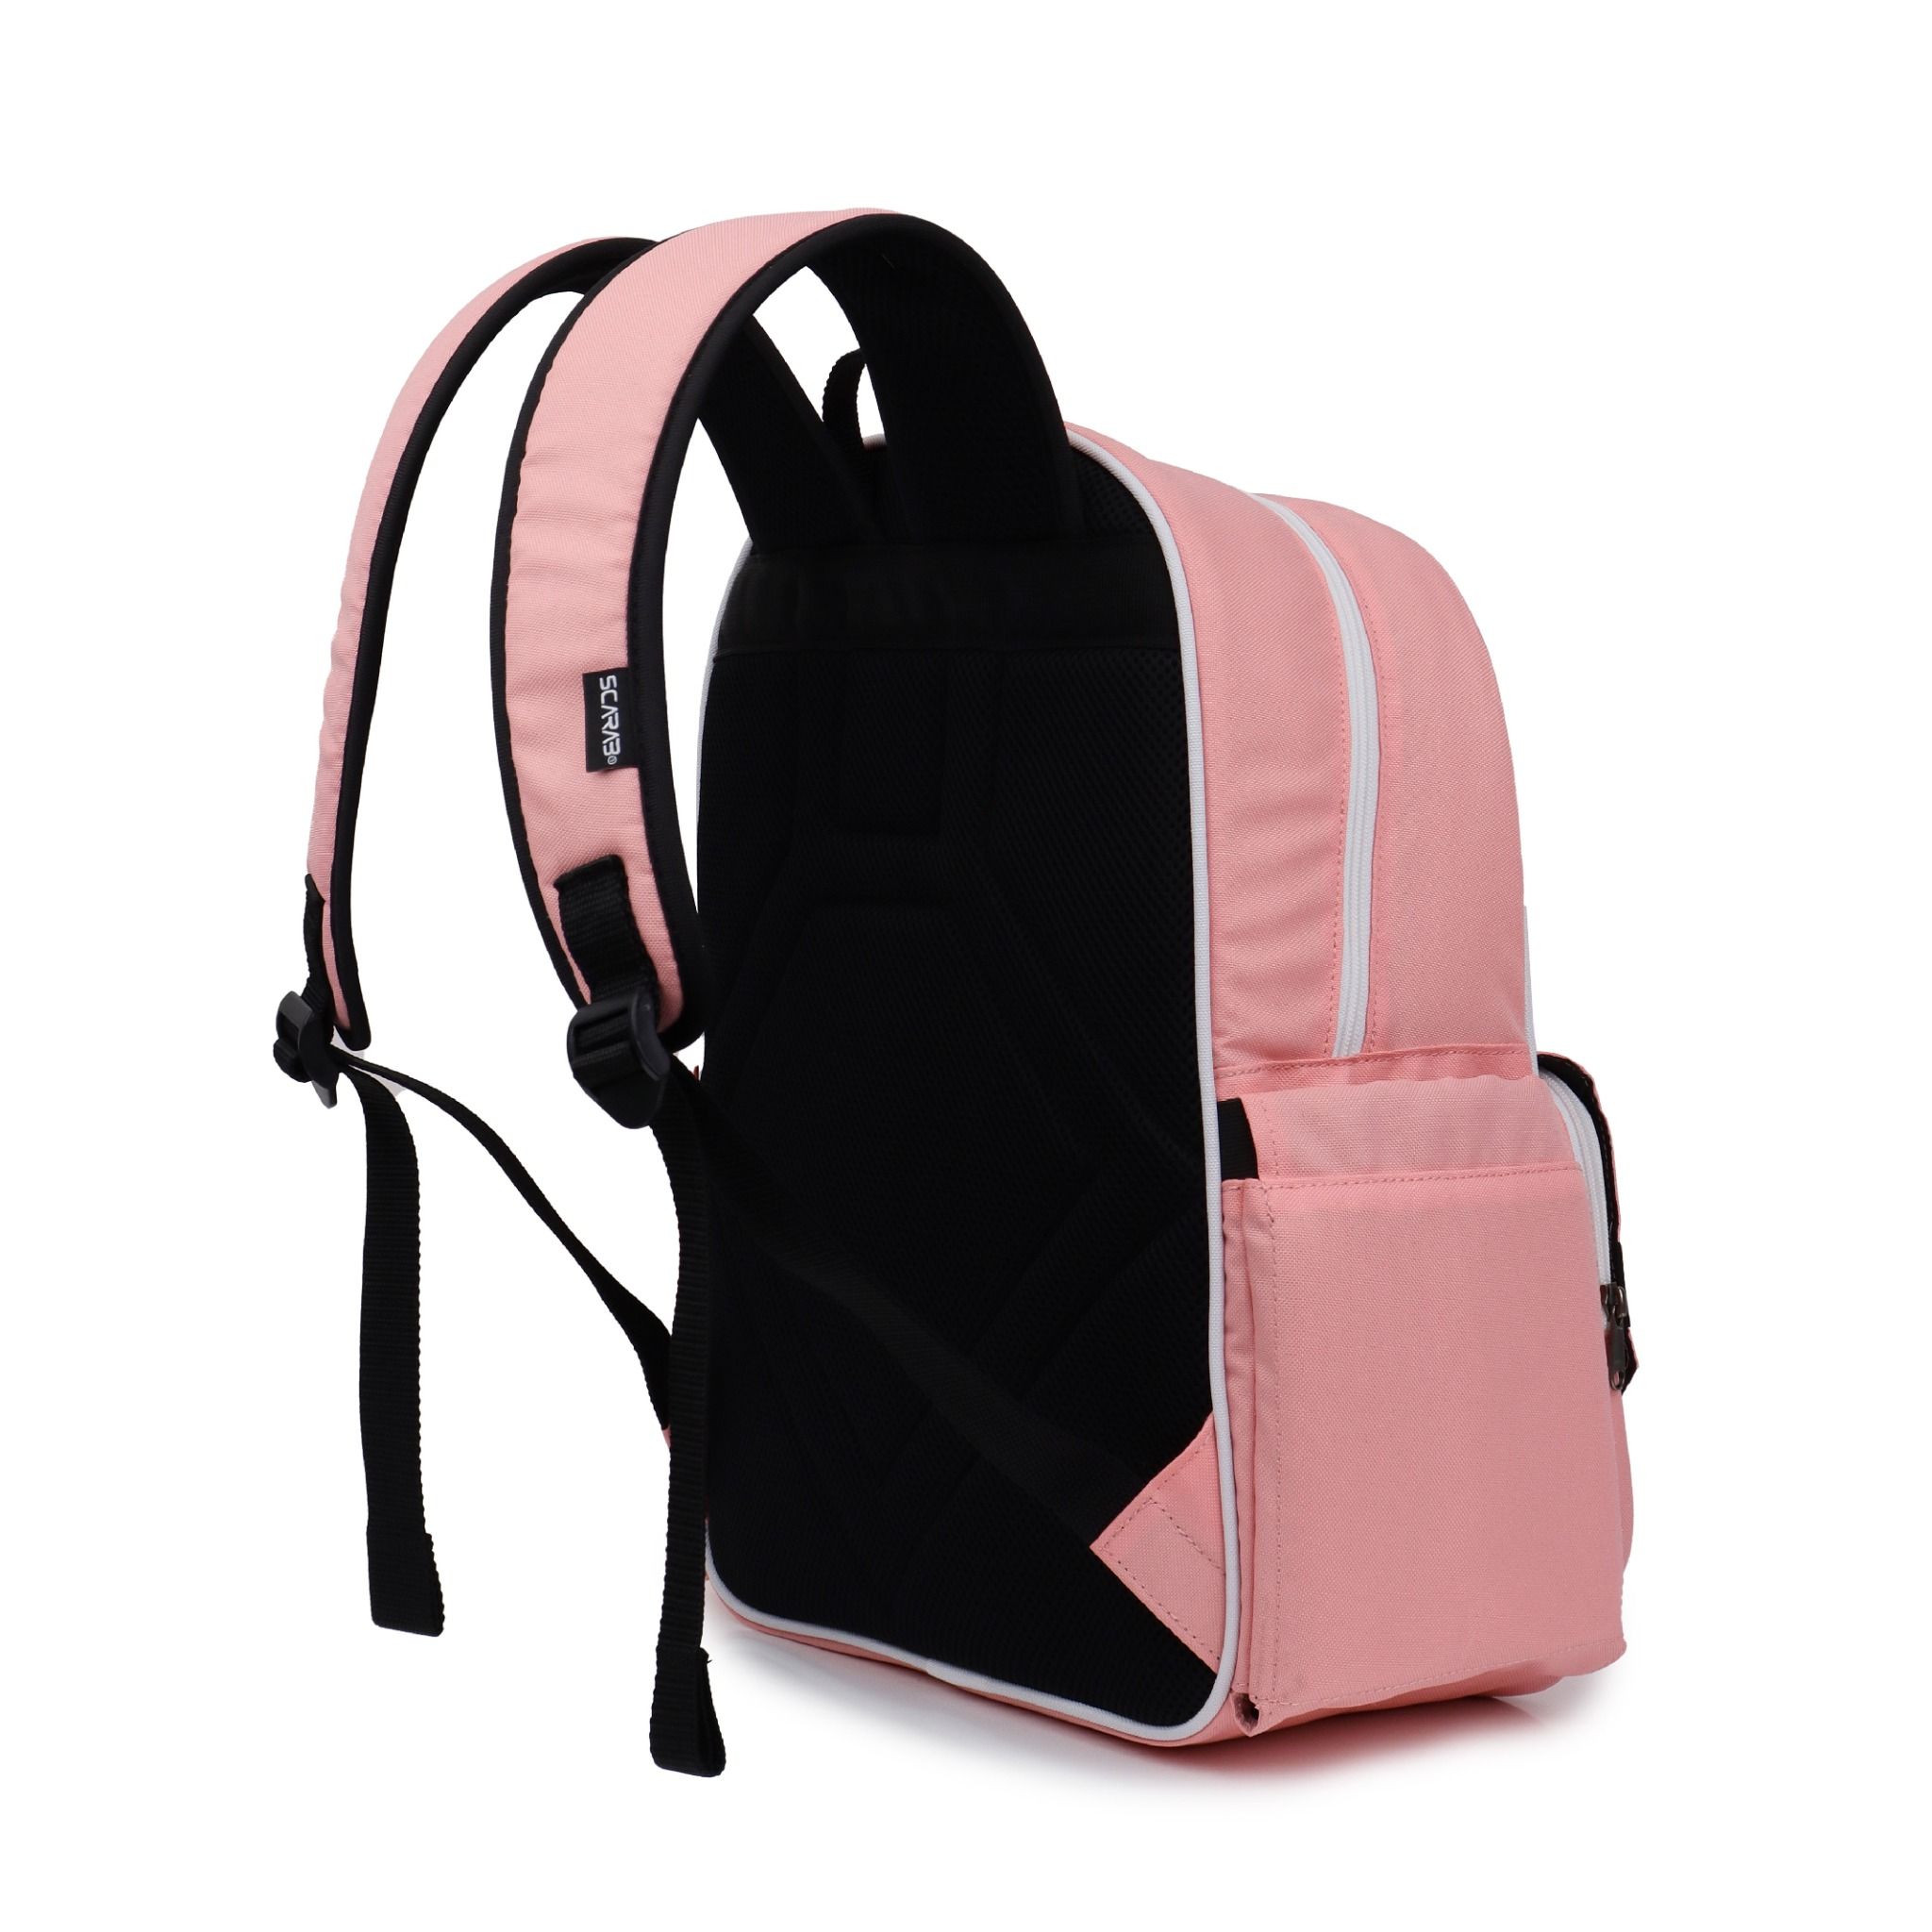  Daypack Backpack - Pink 